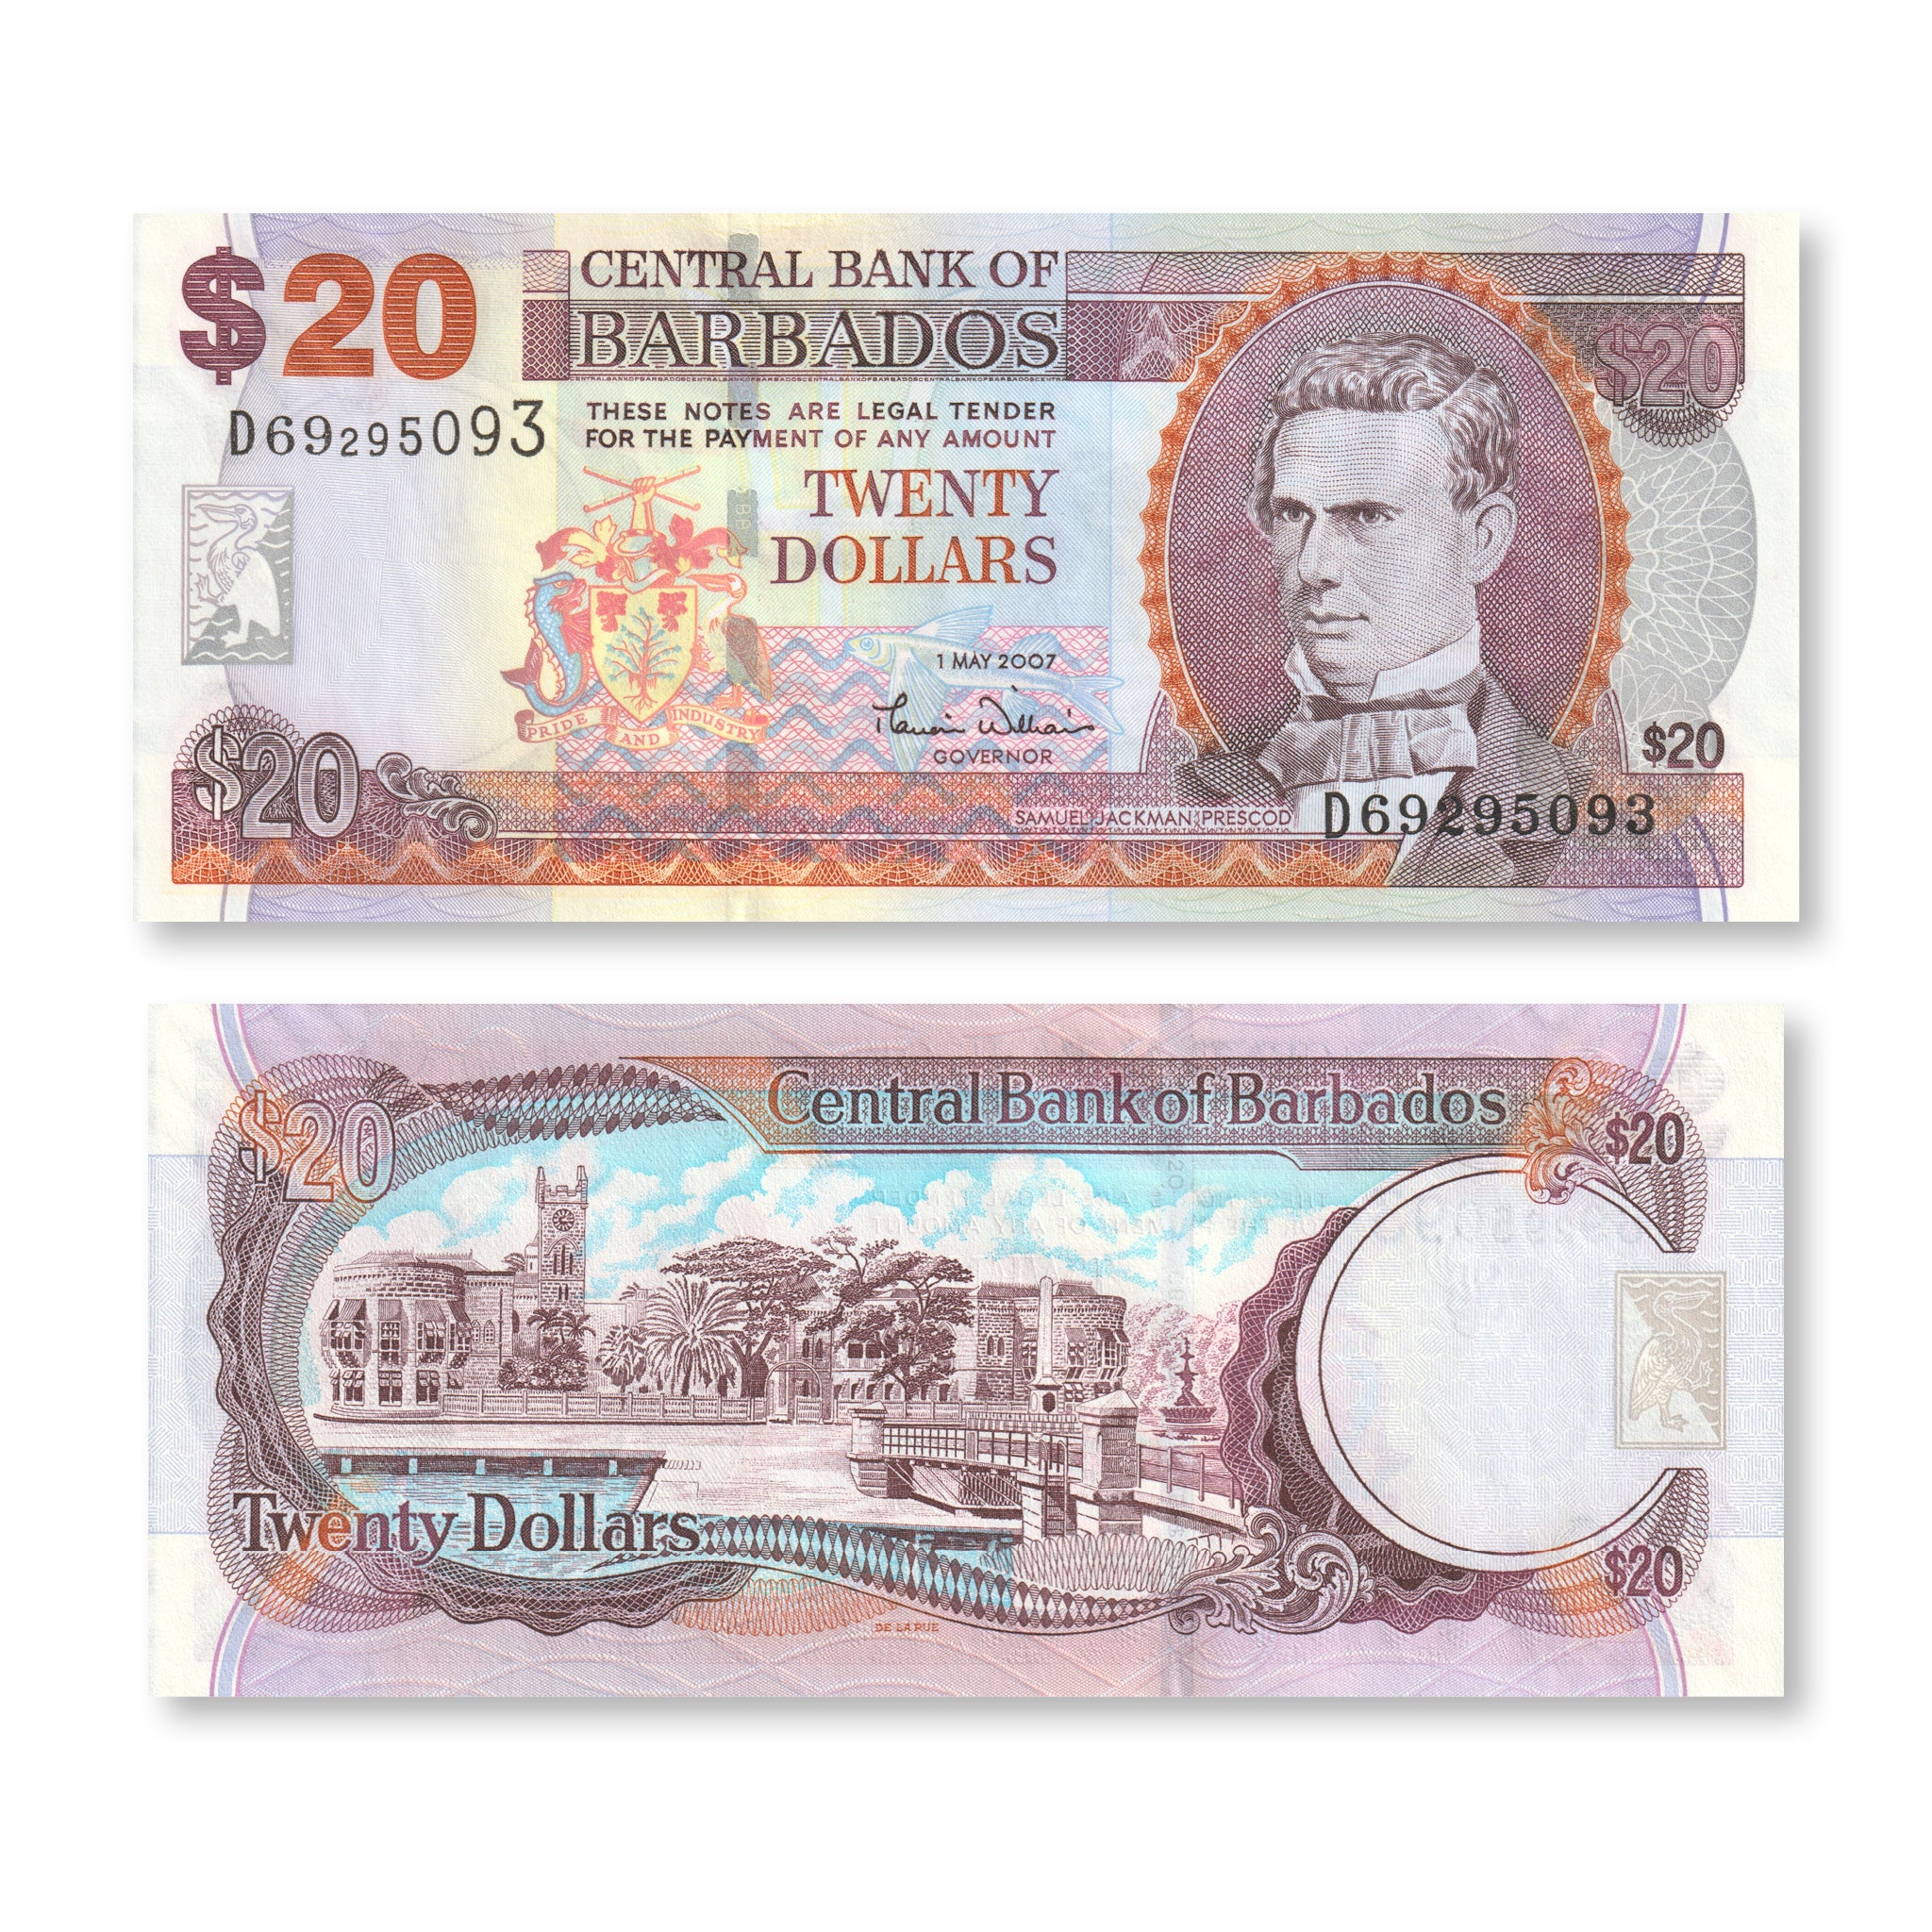 Barbados 20 Dollars, 2007, B228a, P69a, UNC - Robert's World Money - World Banknotes